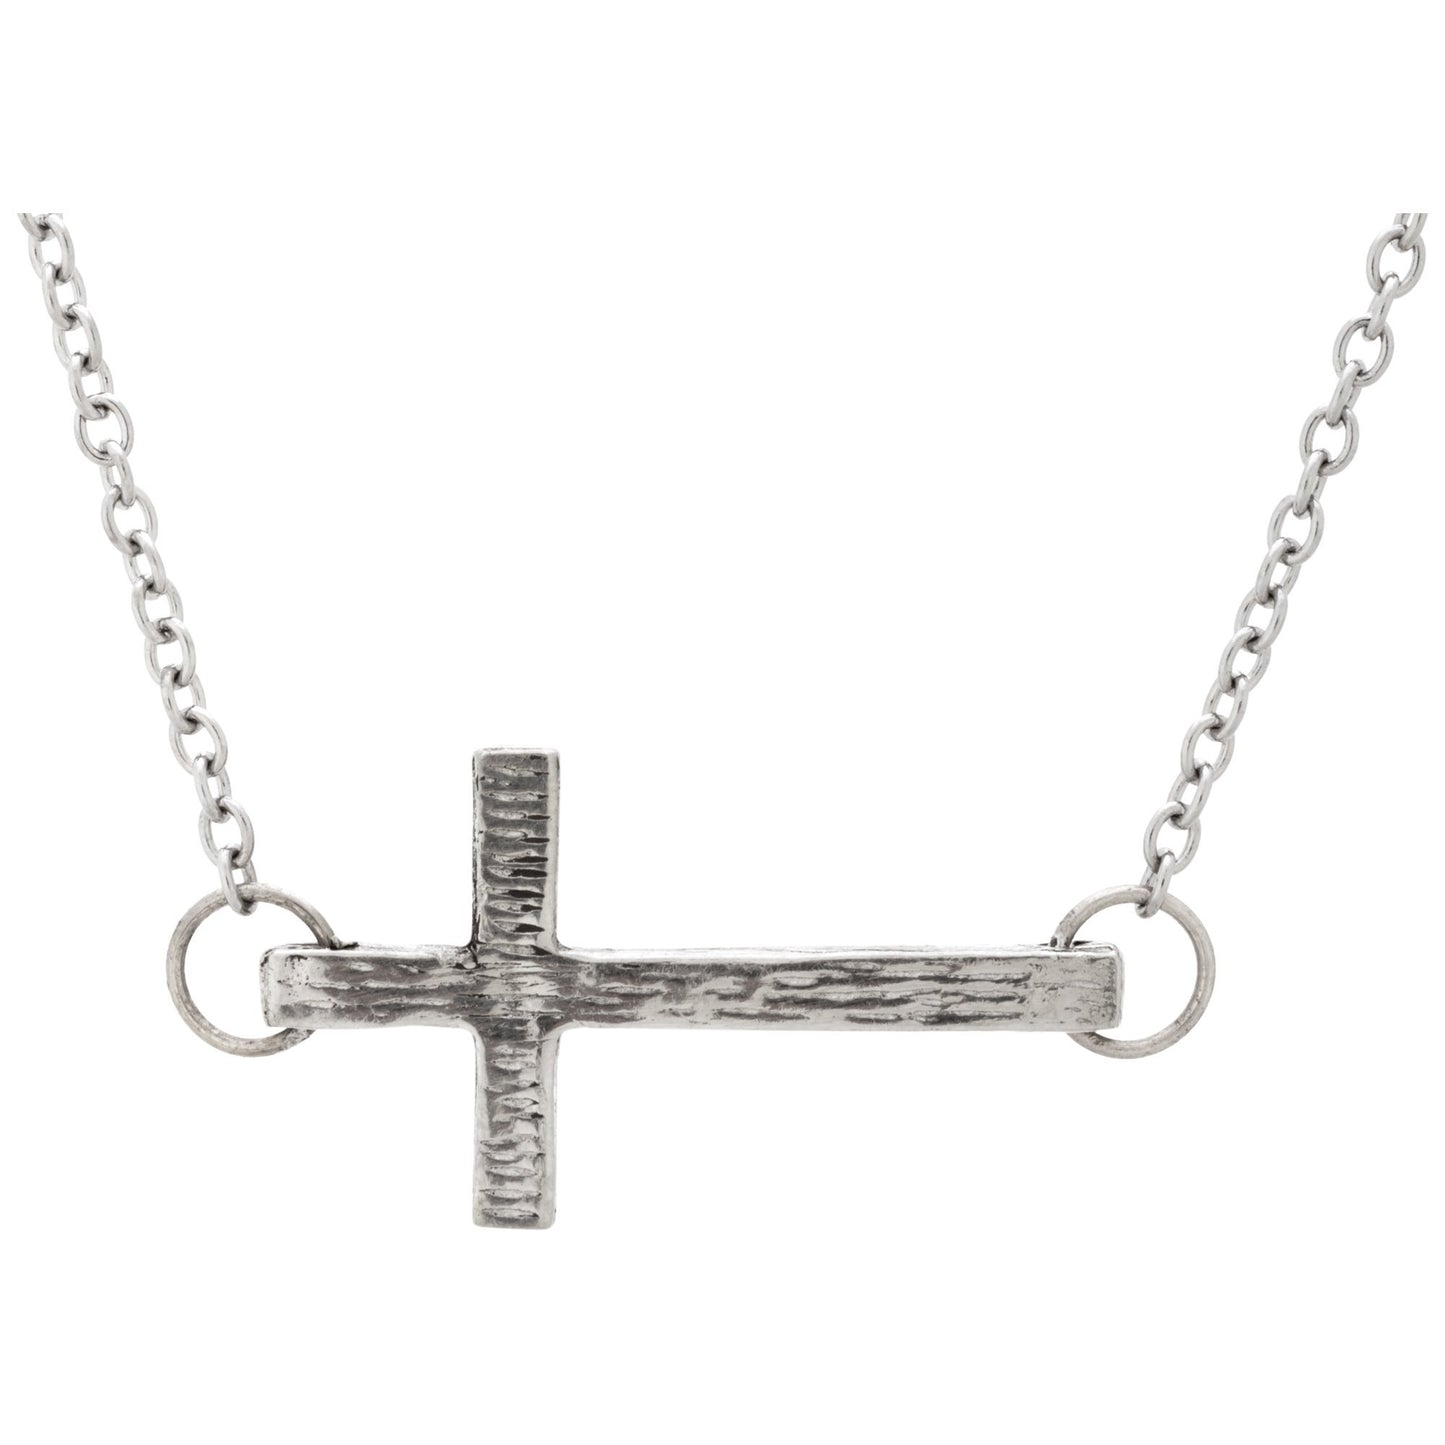 Have A Little Faith Necklace